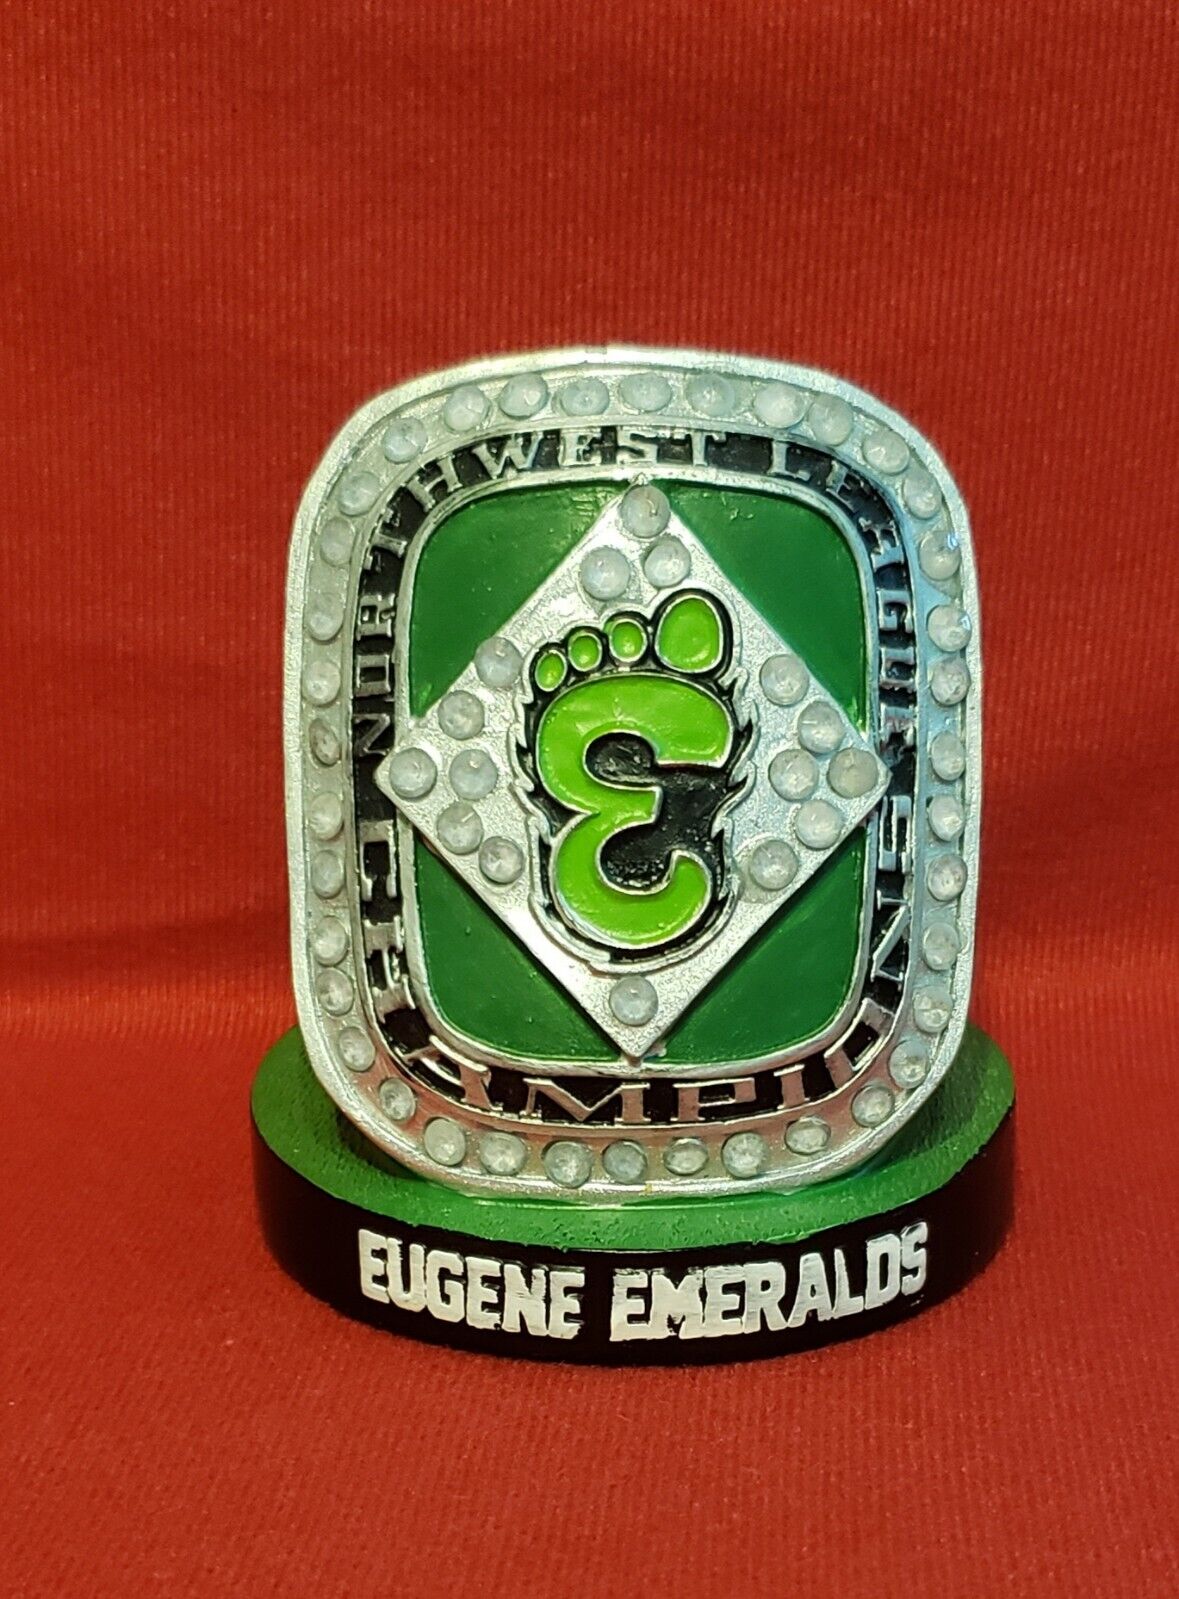 Eugene Emeralds Championship Ring 4x4" Sga Chicago Cubs Curse Reversed